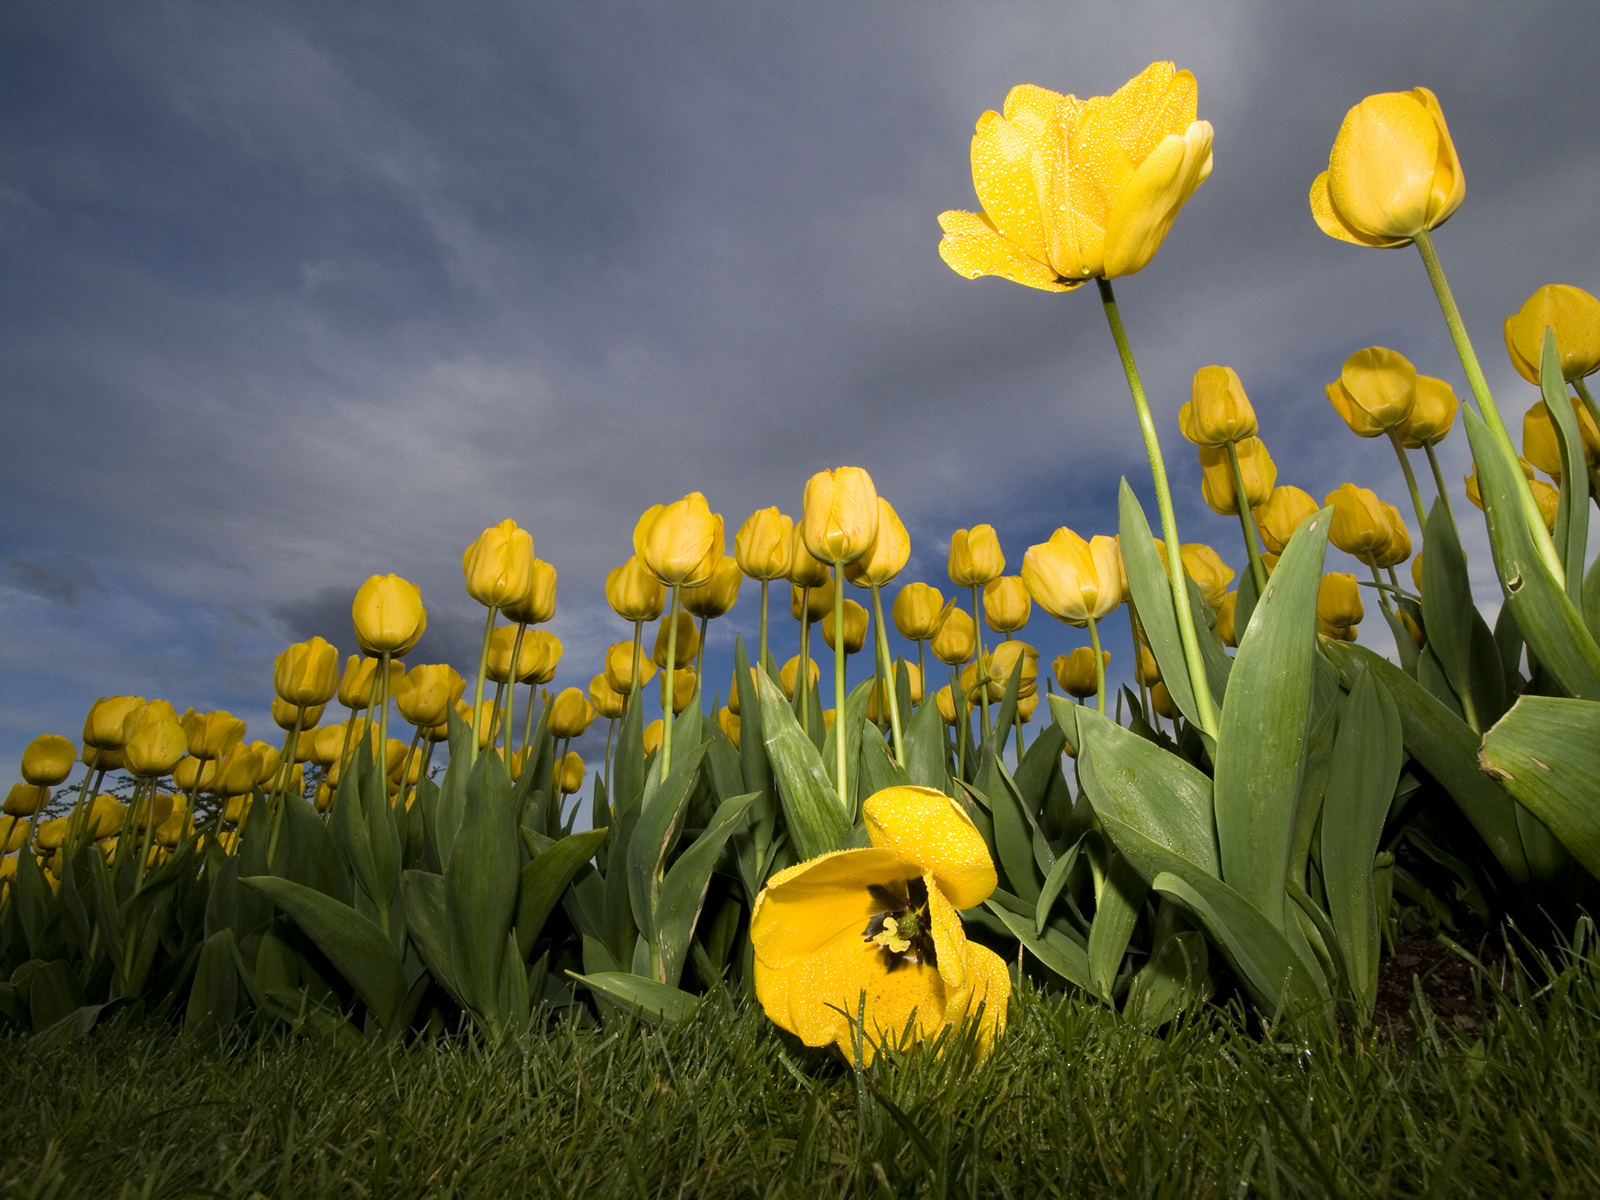 521511 descargar imagen tierra/naturaleza, tulipán, flores: fondos de pantalla y protectores de pantalla gratis